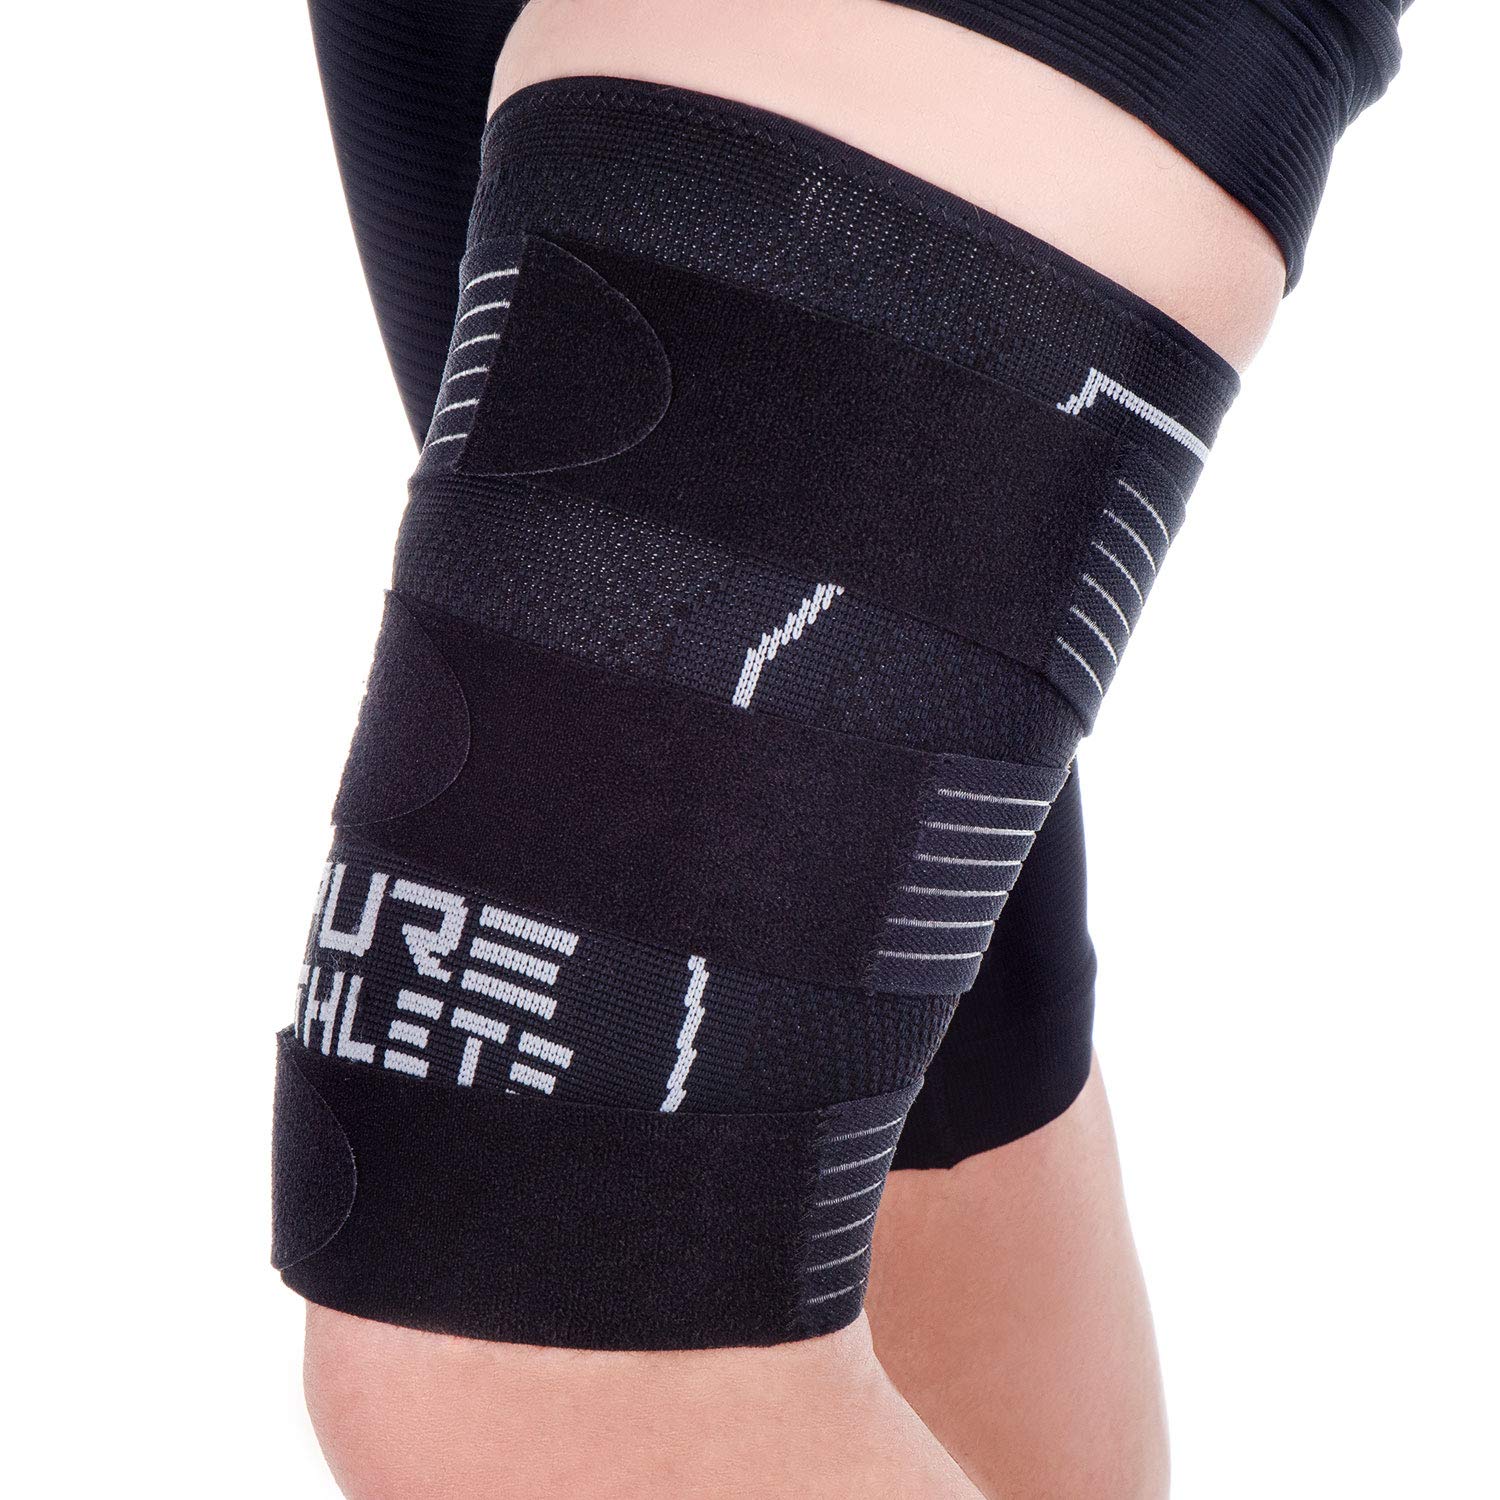 Pure Athlete Thigh Compression Sleeve Adjustable Straps Quad Wrap